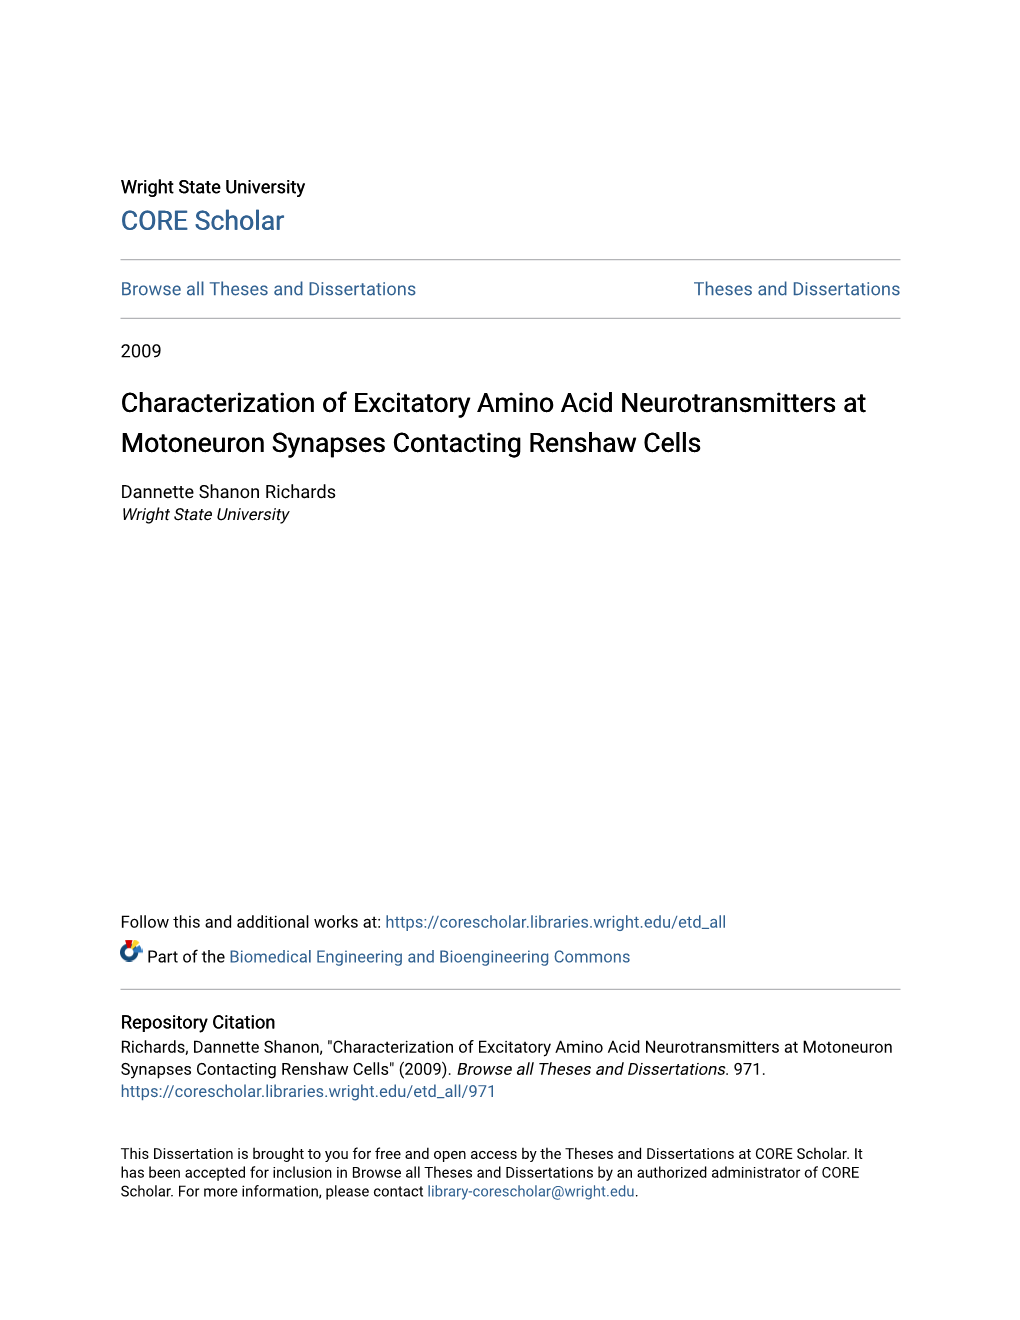 Characterization of Excitatory Amino Acid Neurotransmitters at Motoneuron Synapses Contacting Renshaw Cells